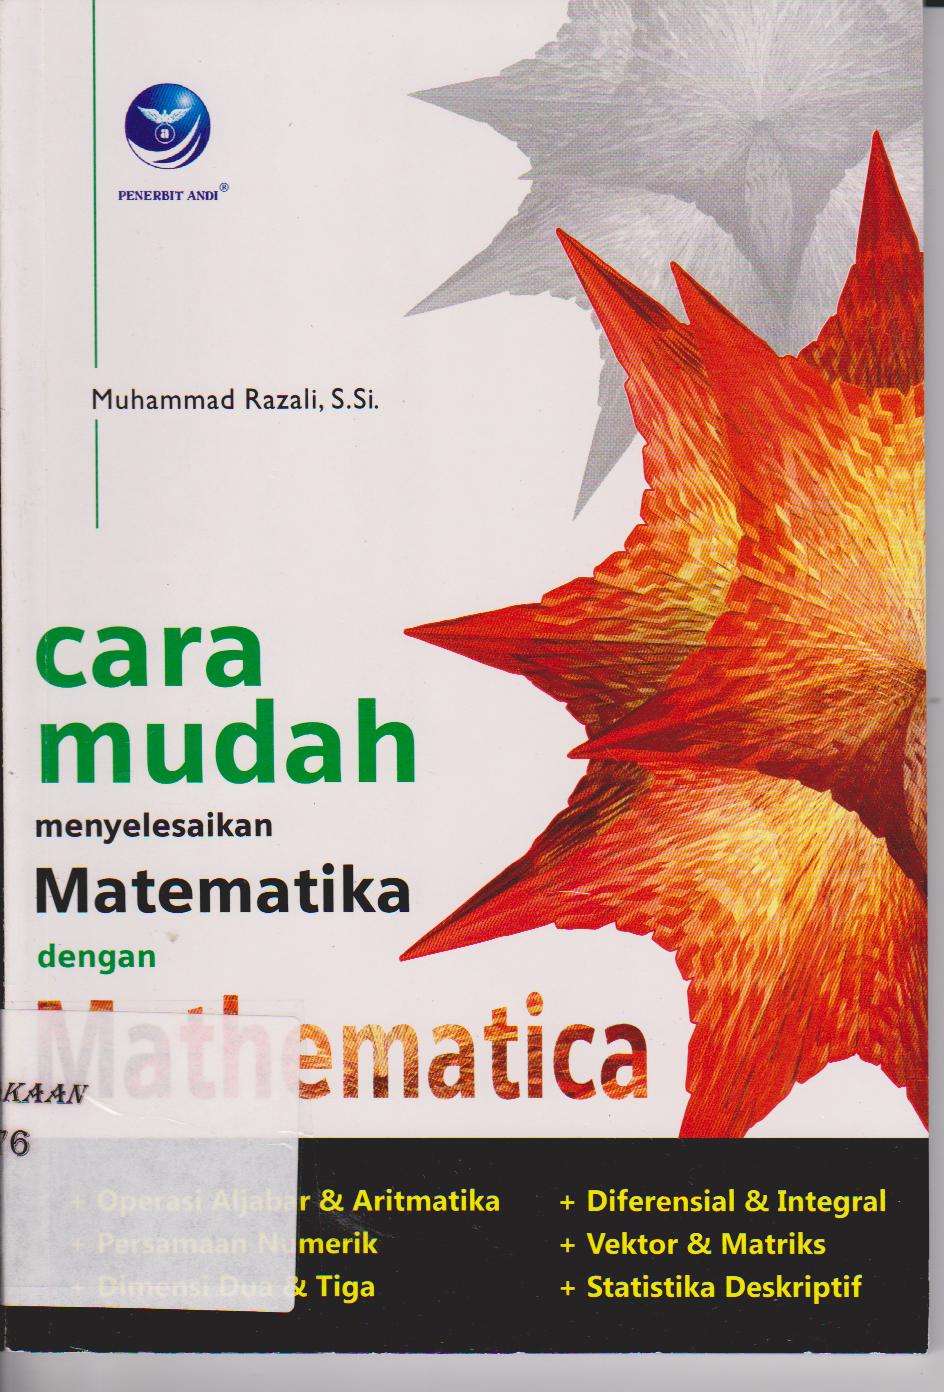 Cara Mudah menyelesaikan Matematika dengan Mathematica